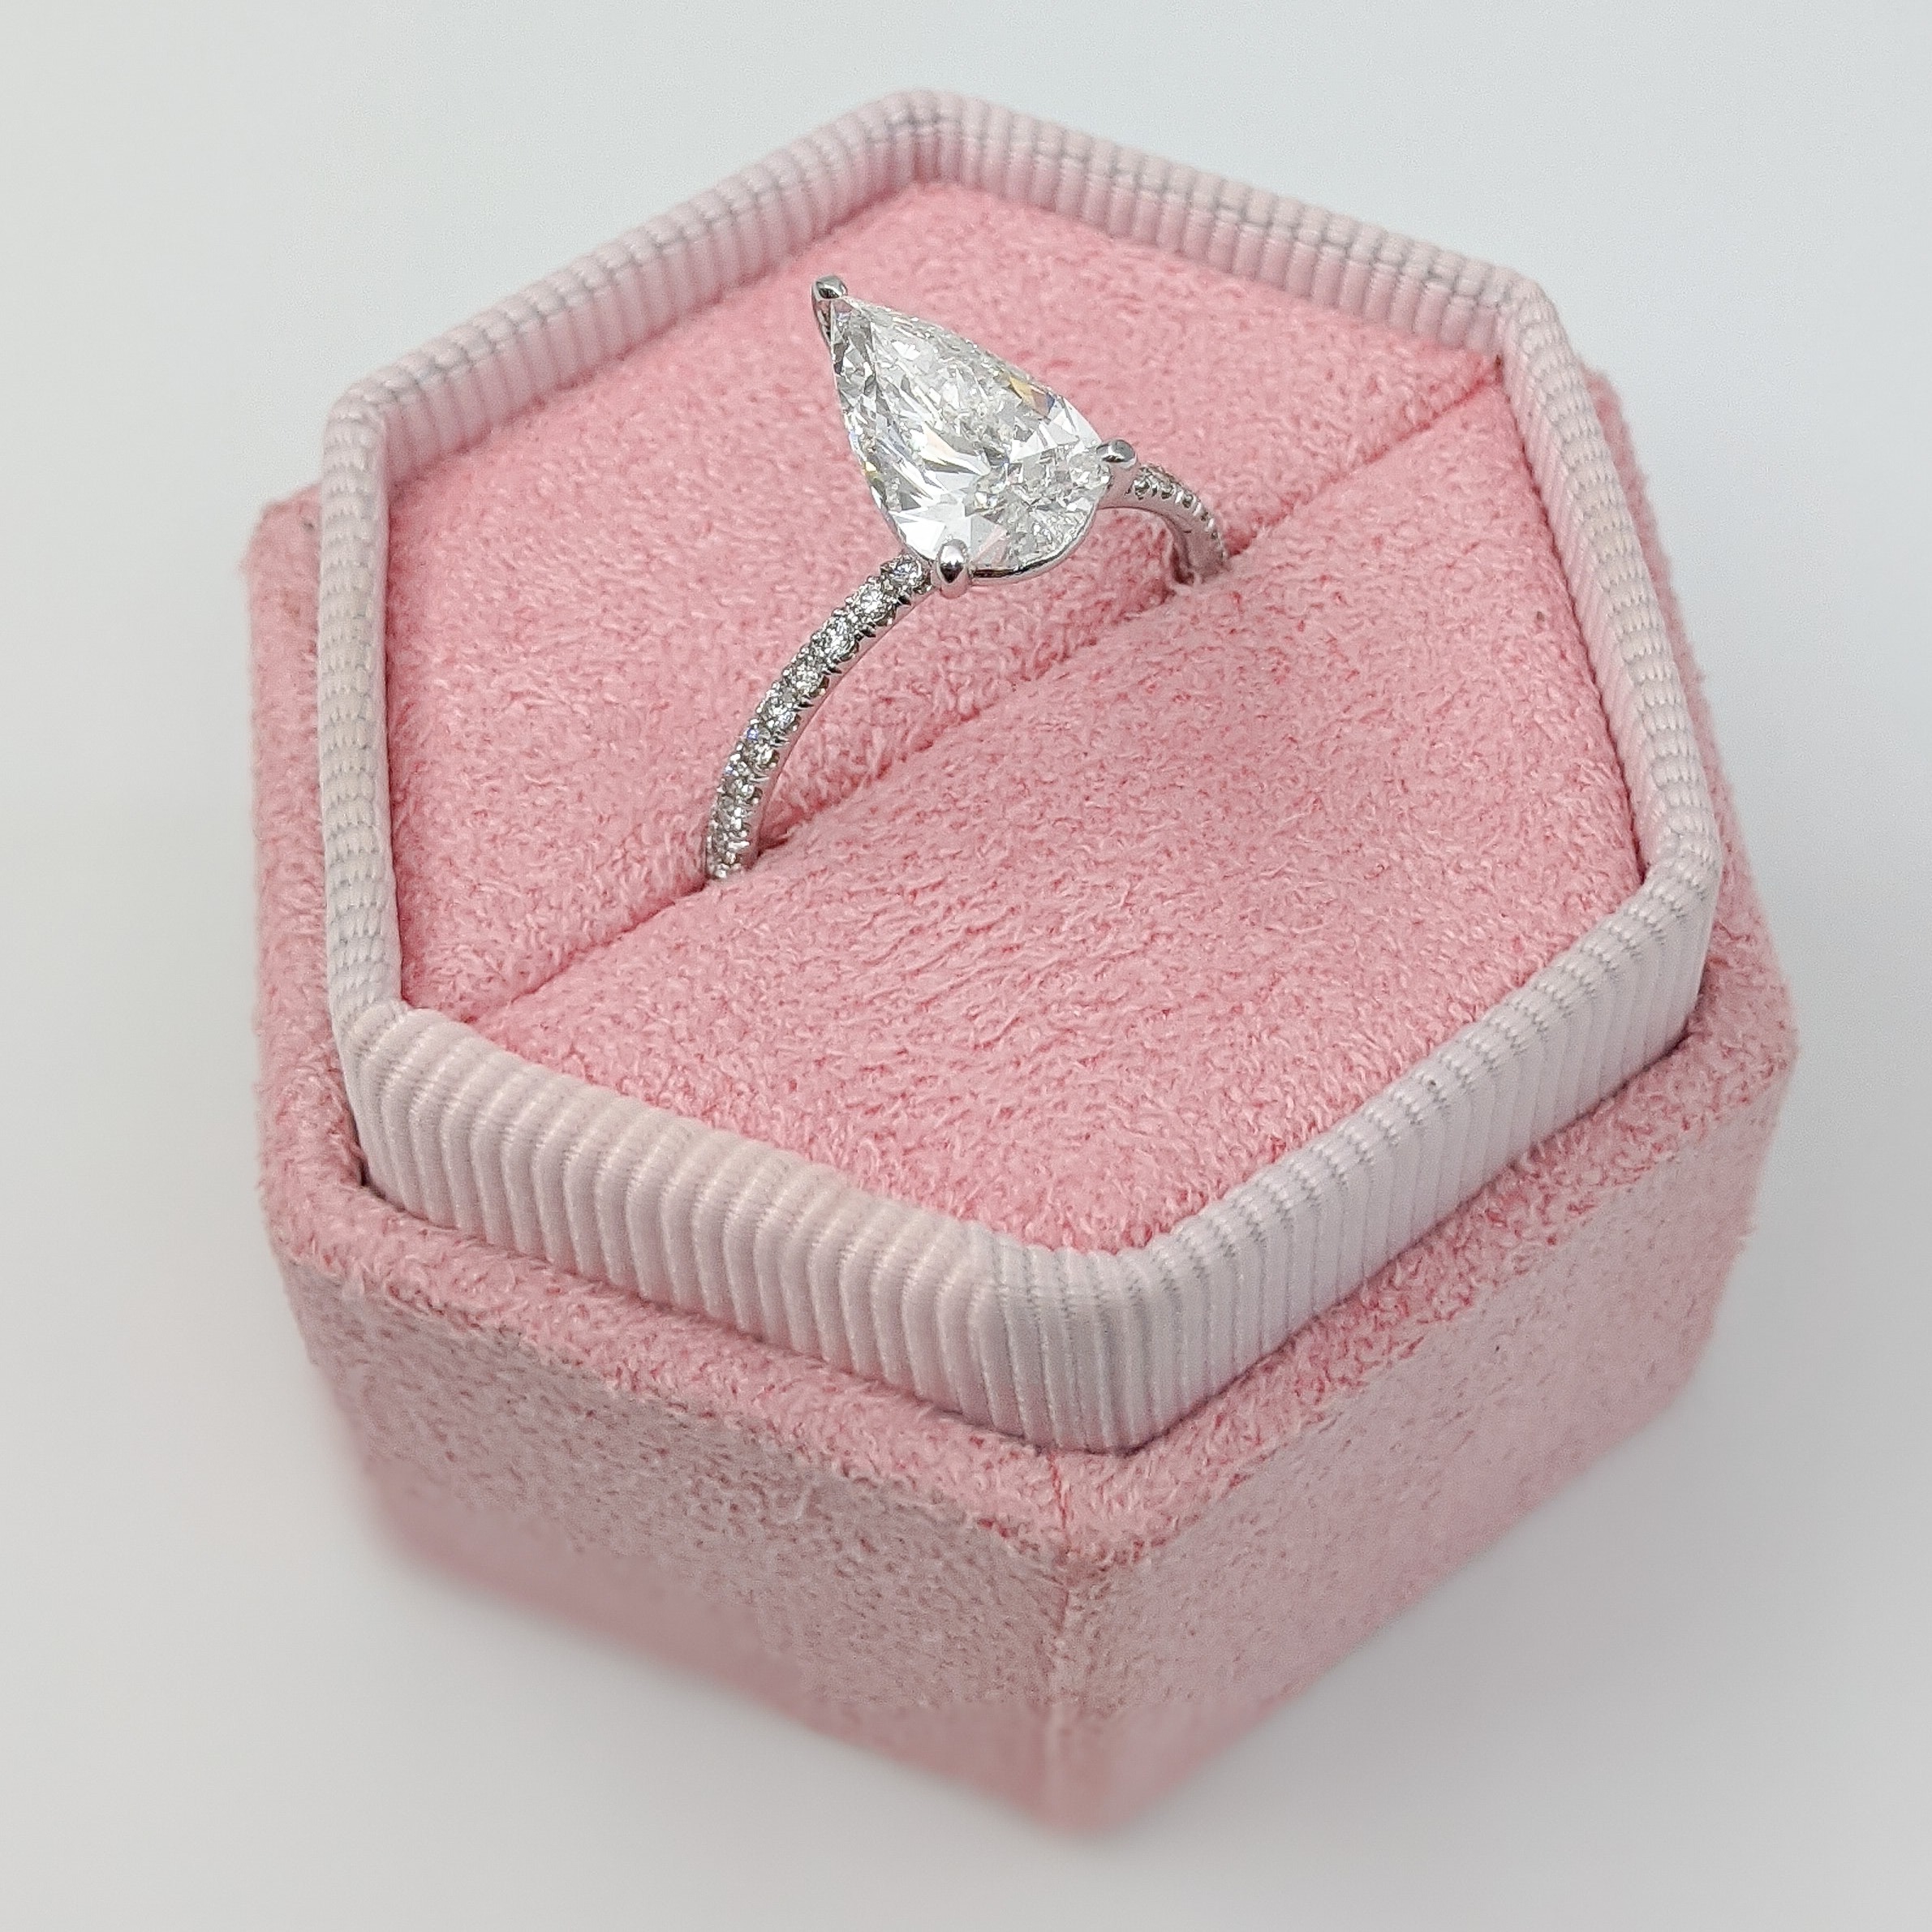 DARSHIK TRADERS Suede Velvet Finish Jewellery Ring Box 3x3